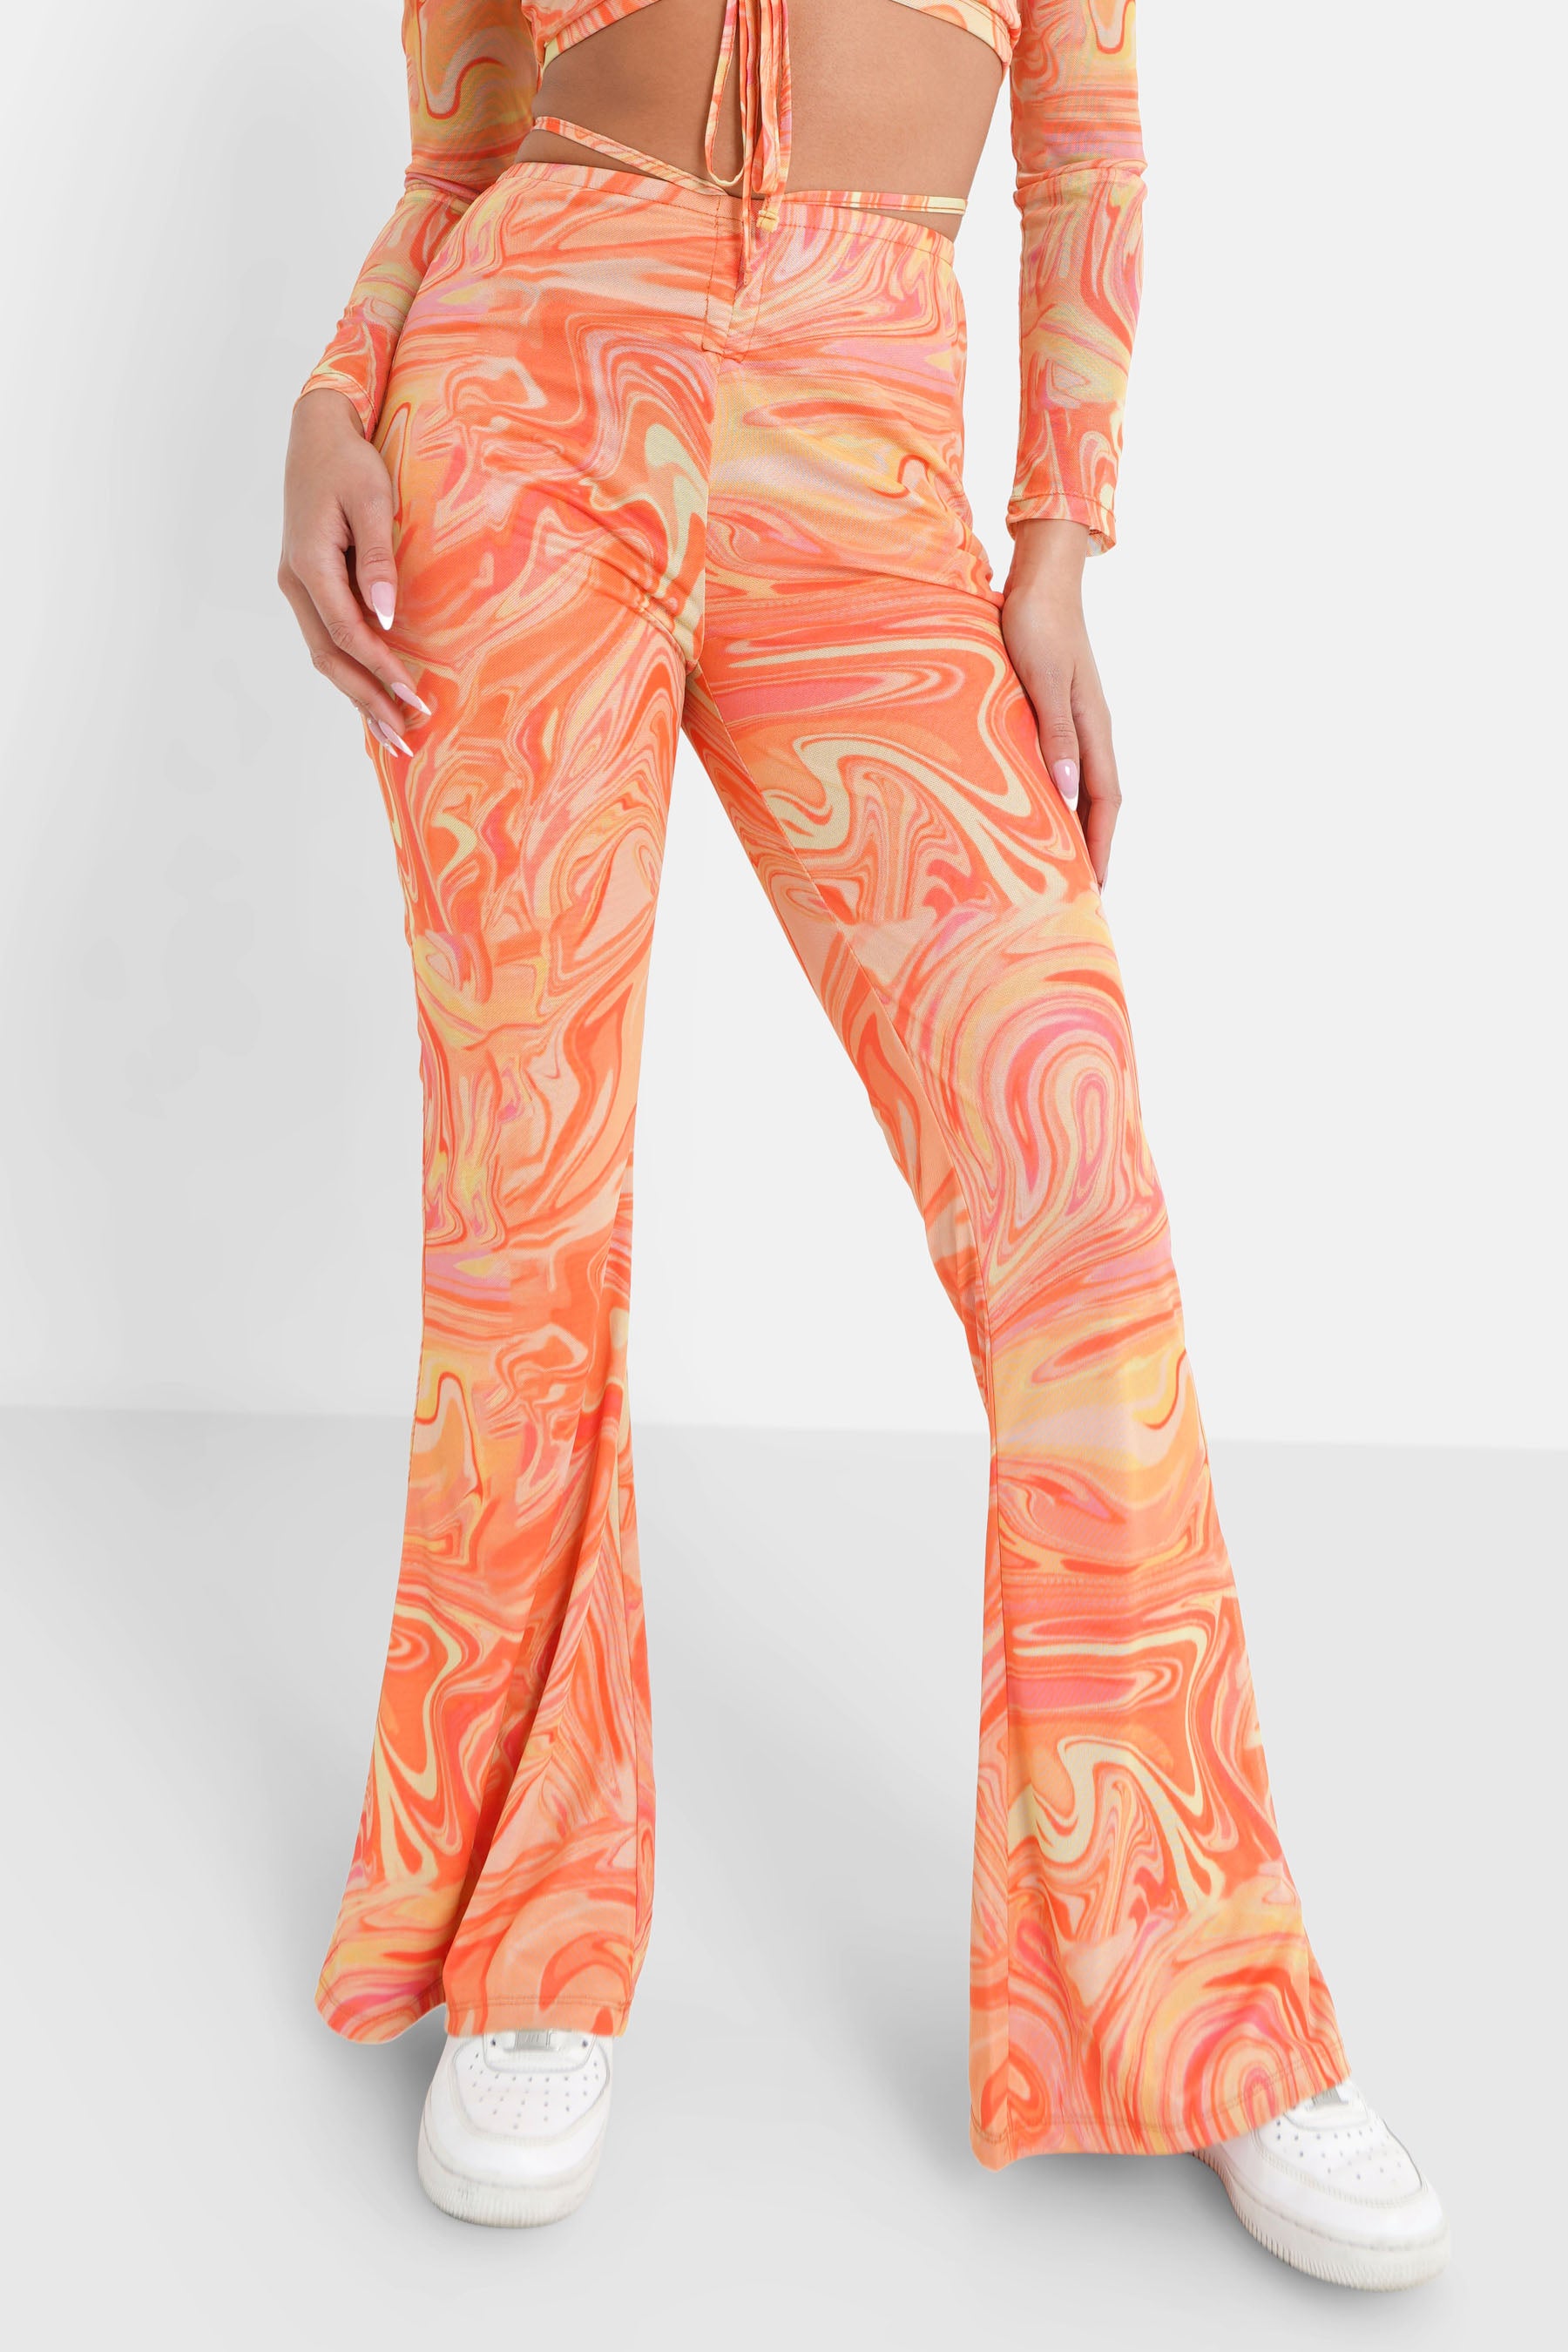 Ink mesh pants Orange